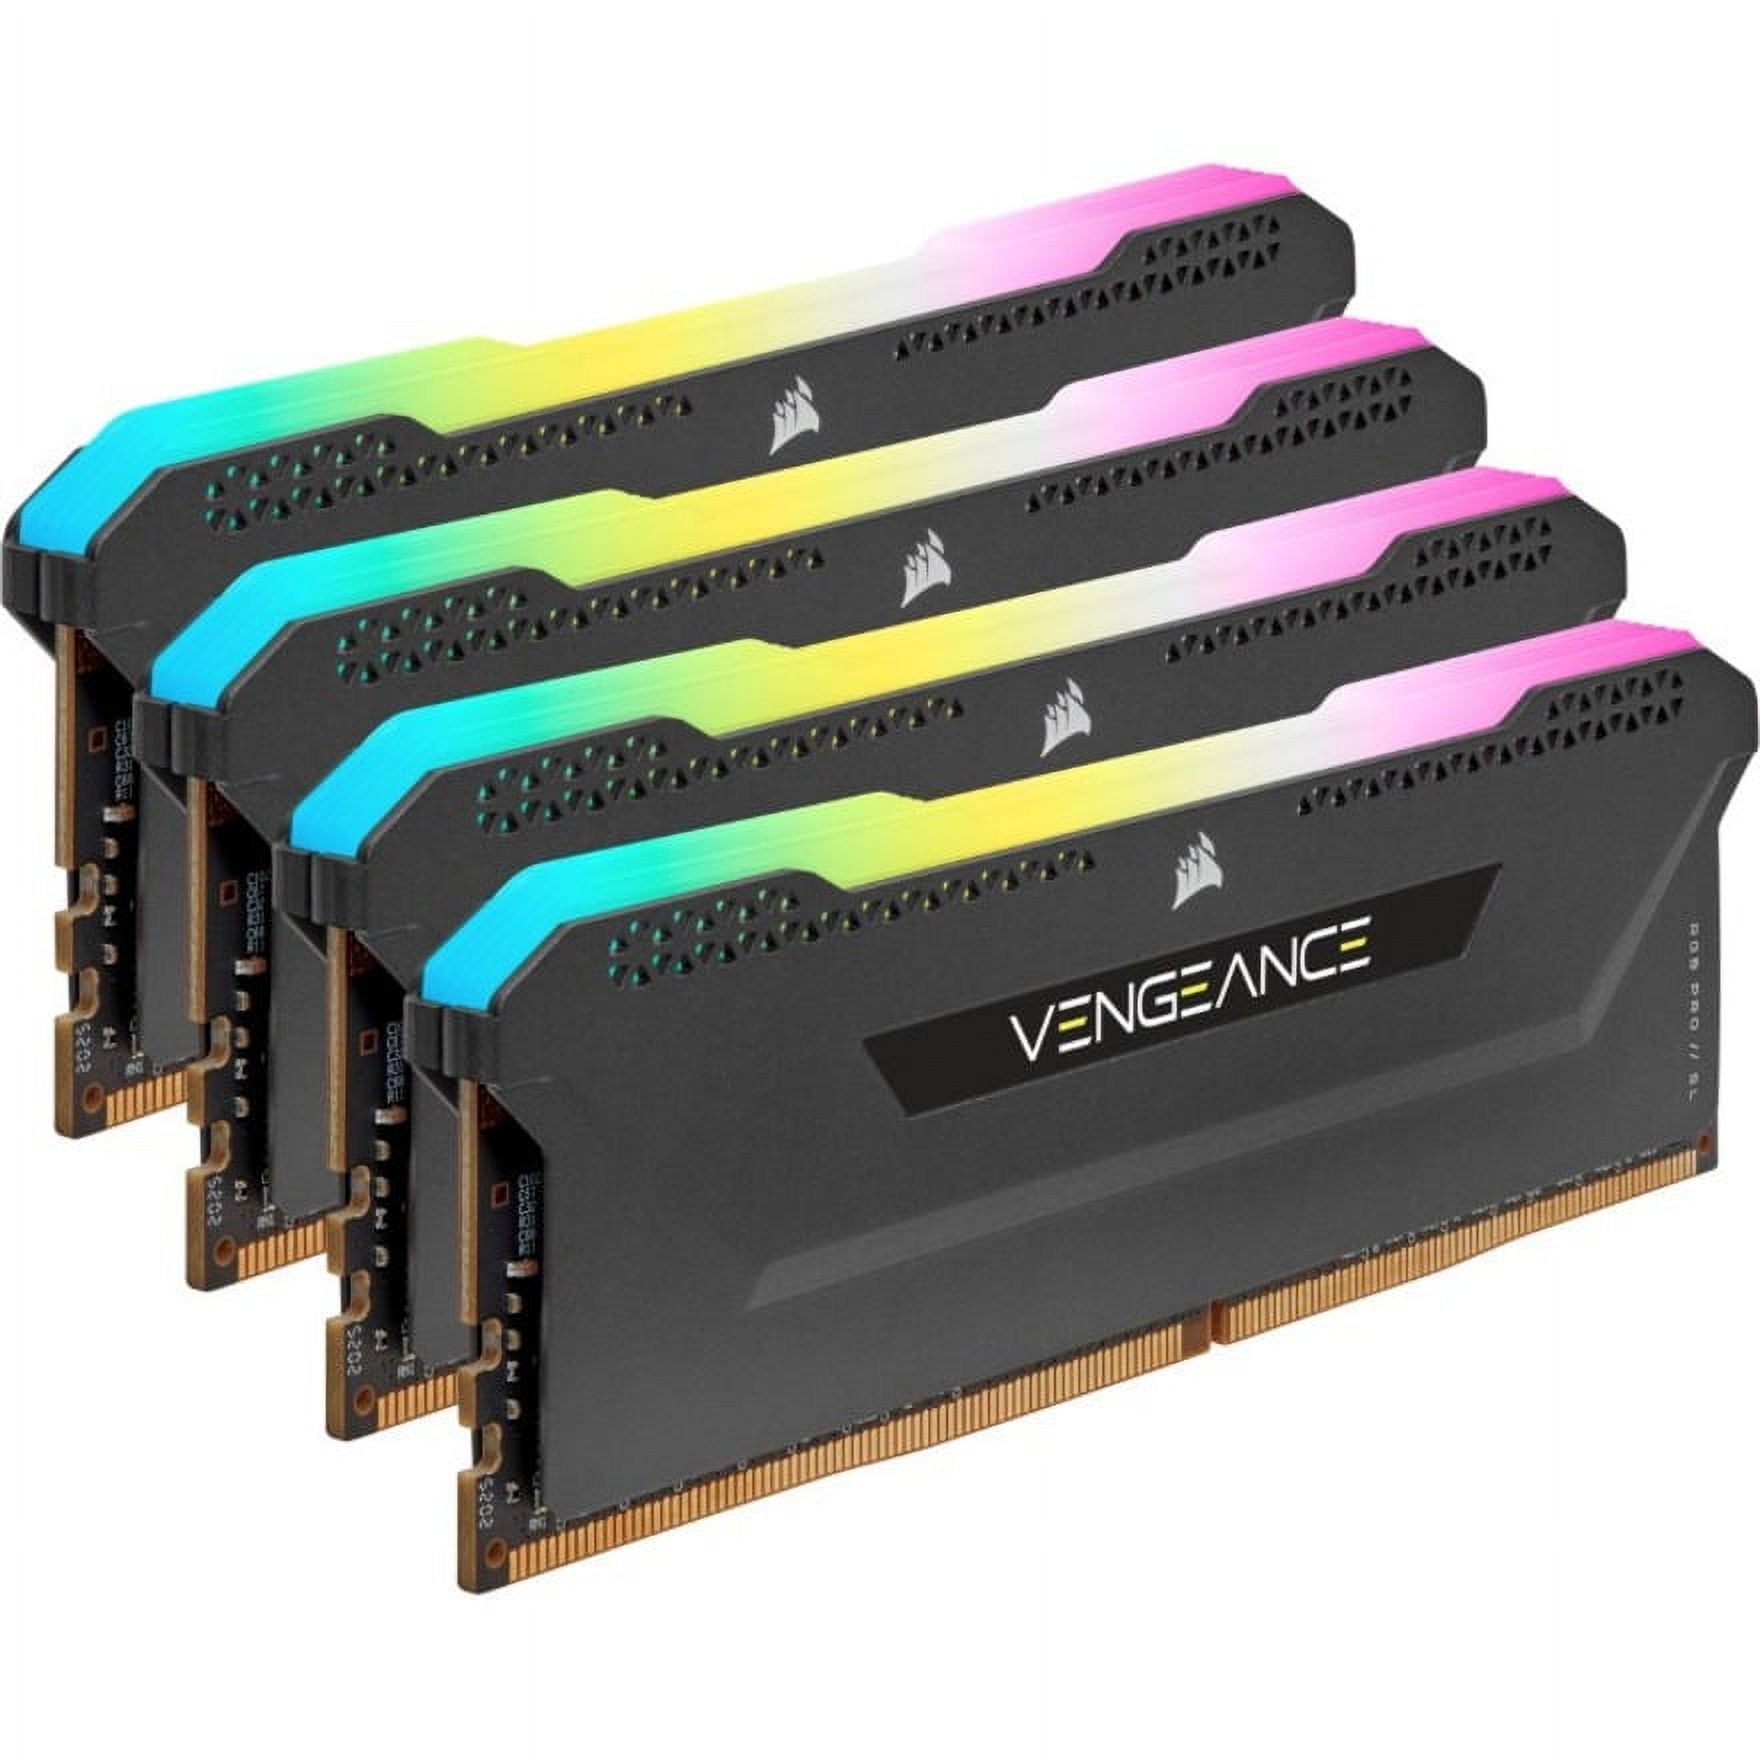 DRAM 3200MHz Black Memory DDR4 Vengeance - 128GB Pro SL C16 Corsair Kit (4x32GB) RGB